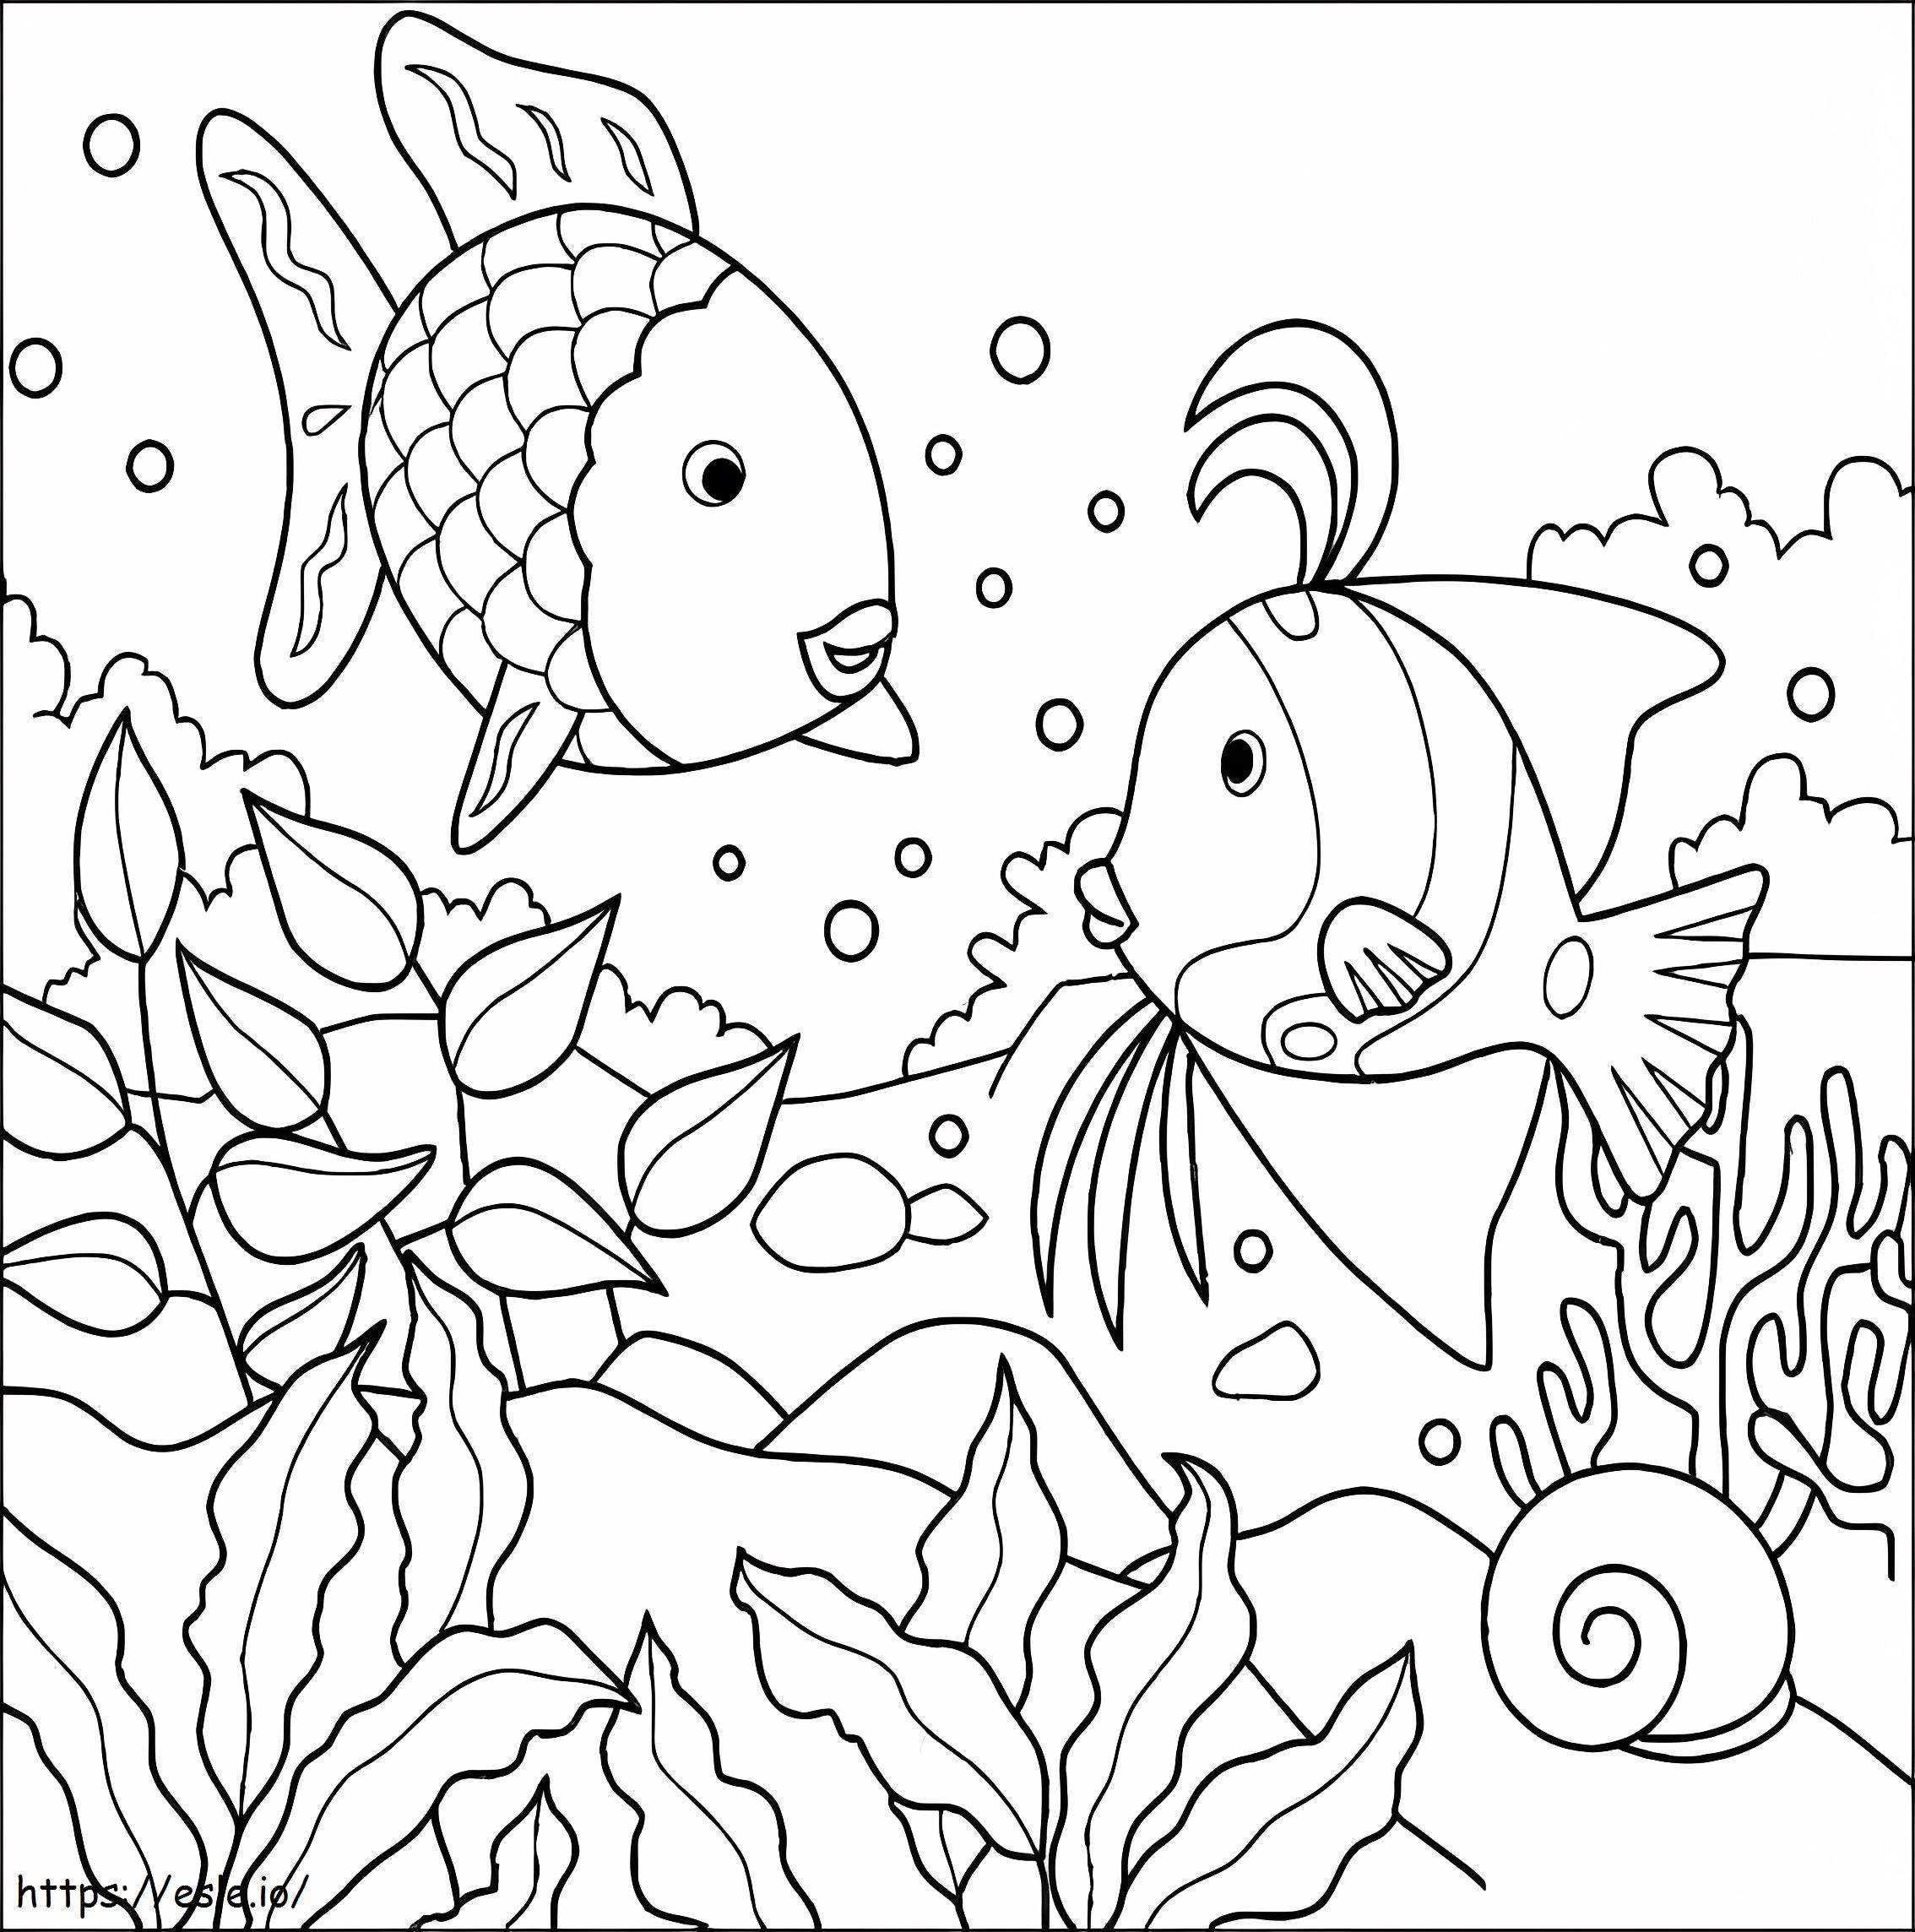 Ocean Scene coloring page